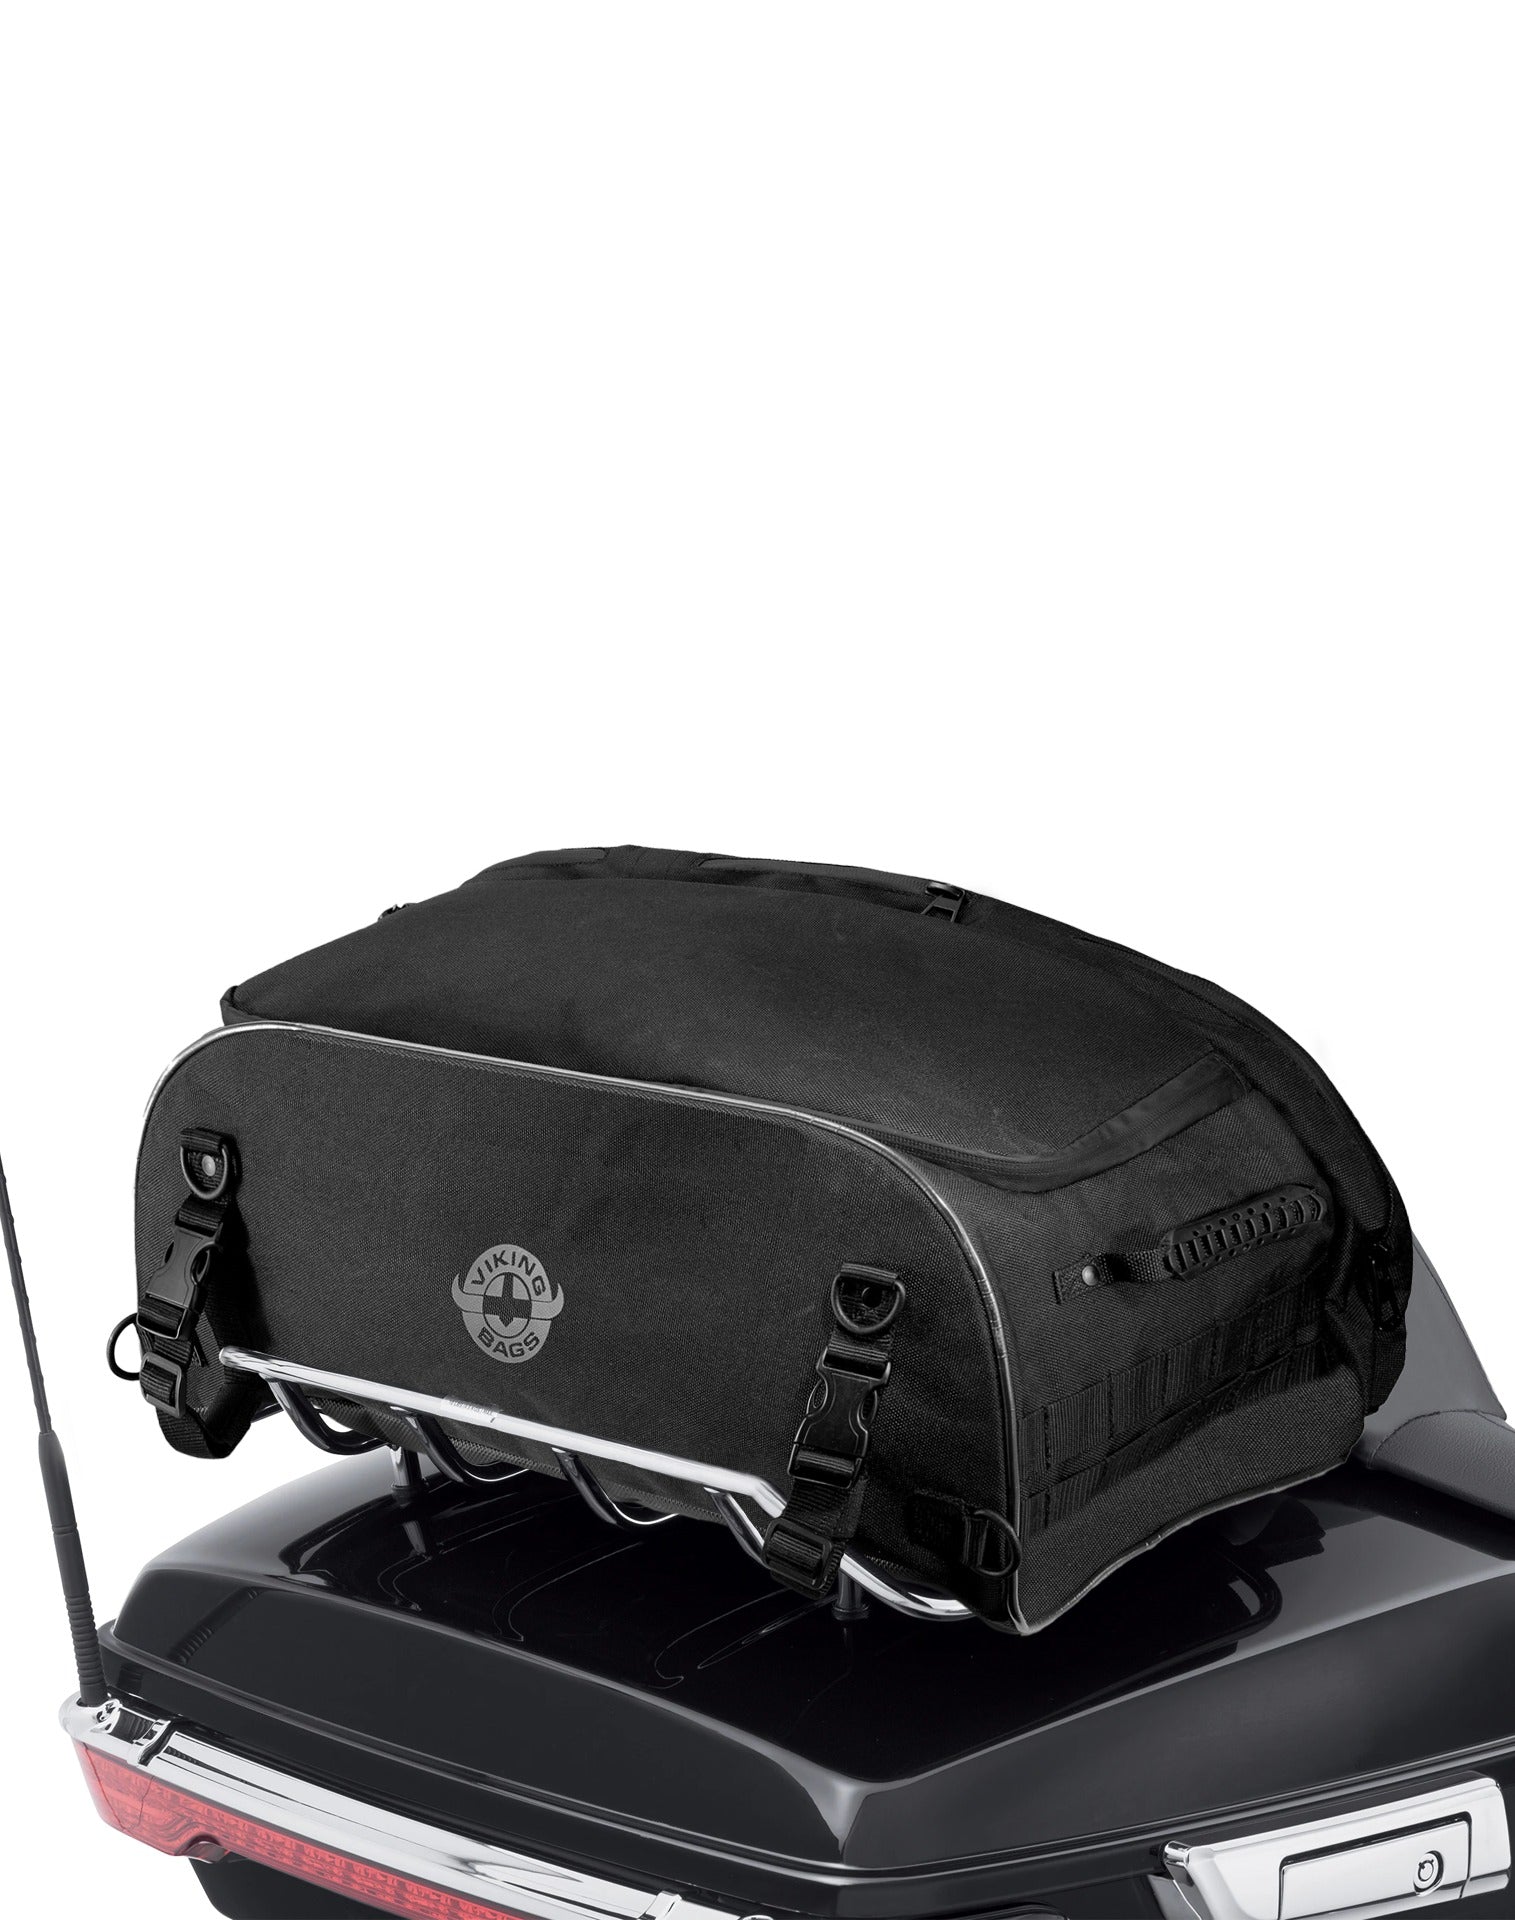 42L - Voyage Collapsible XL Indian Motorcycle Luggage Rack Bag